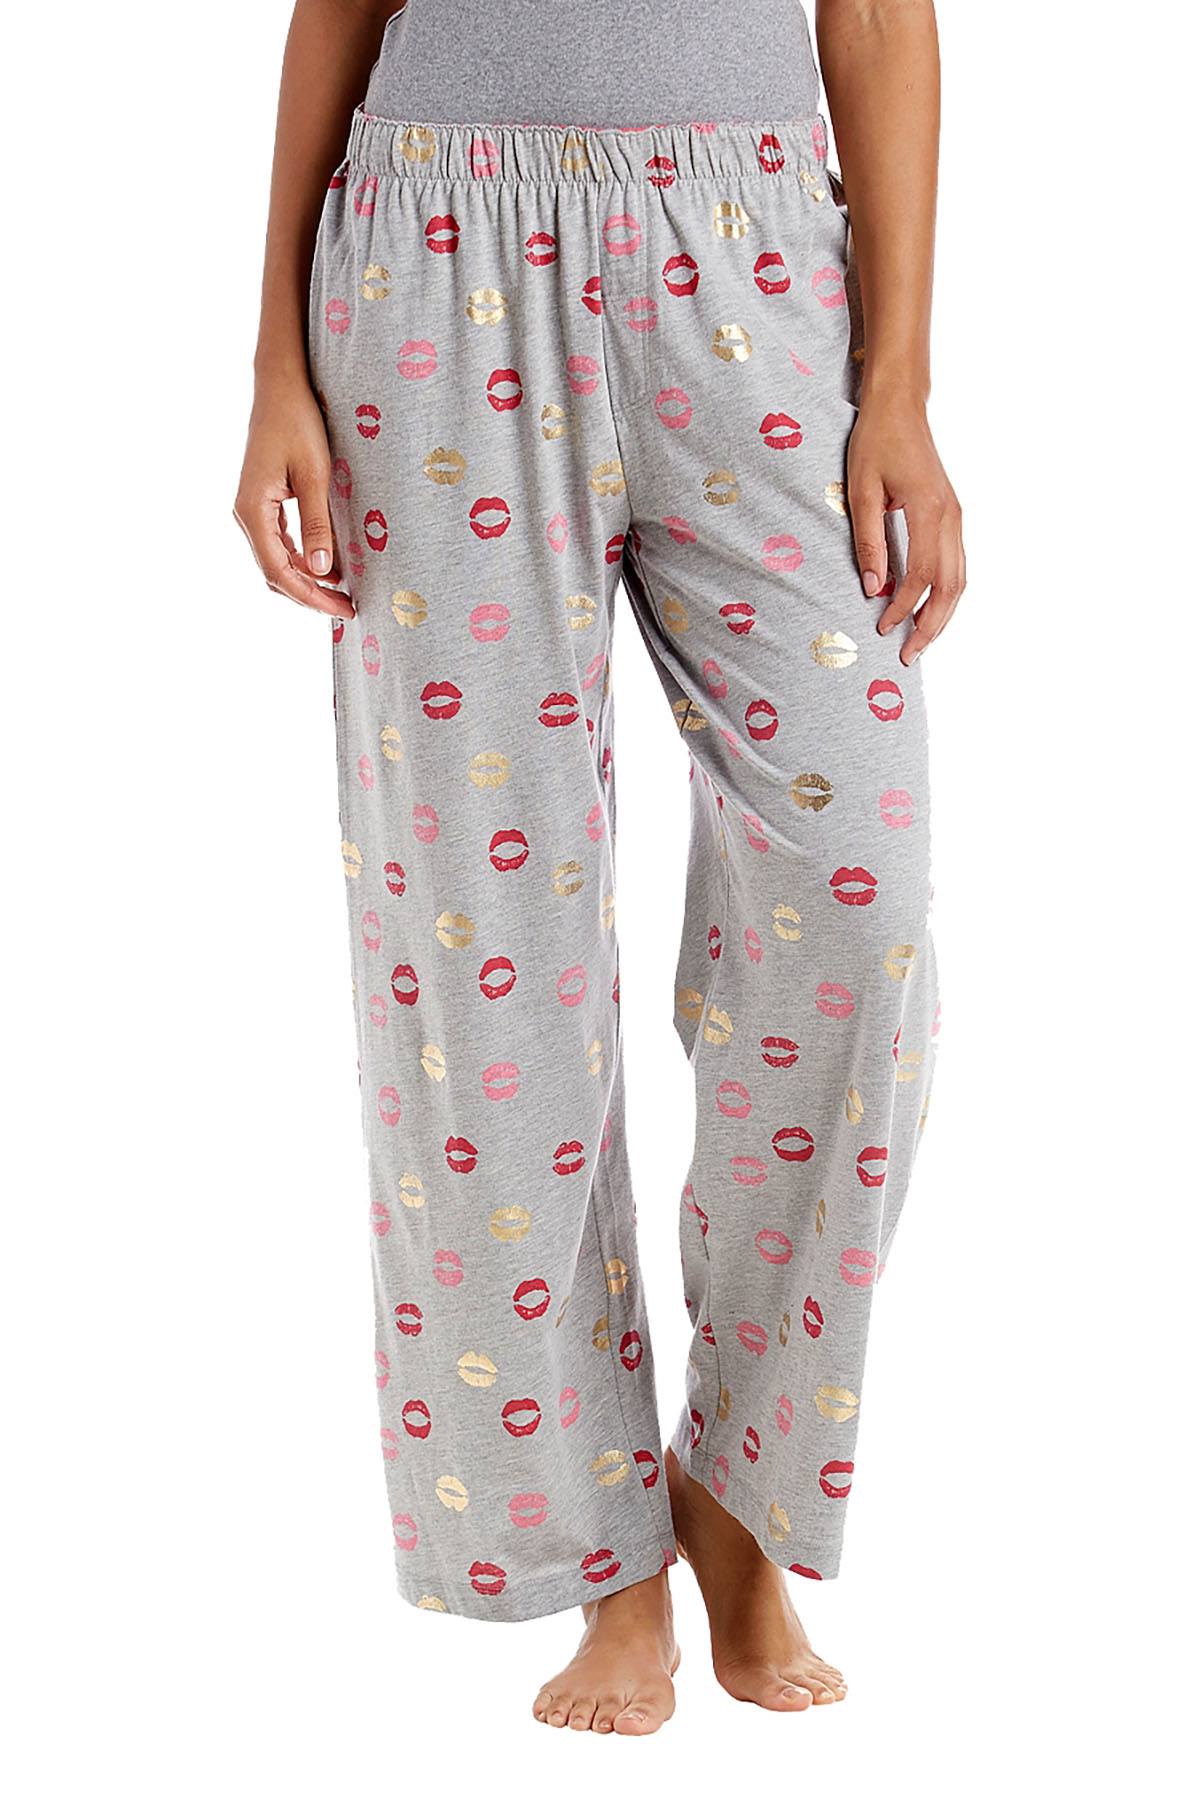 Hue Light Heather-Grey Novelty Kiss Lips Print Pajama Pant